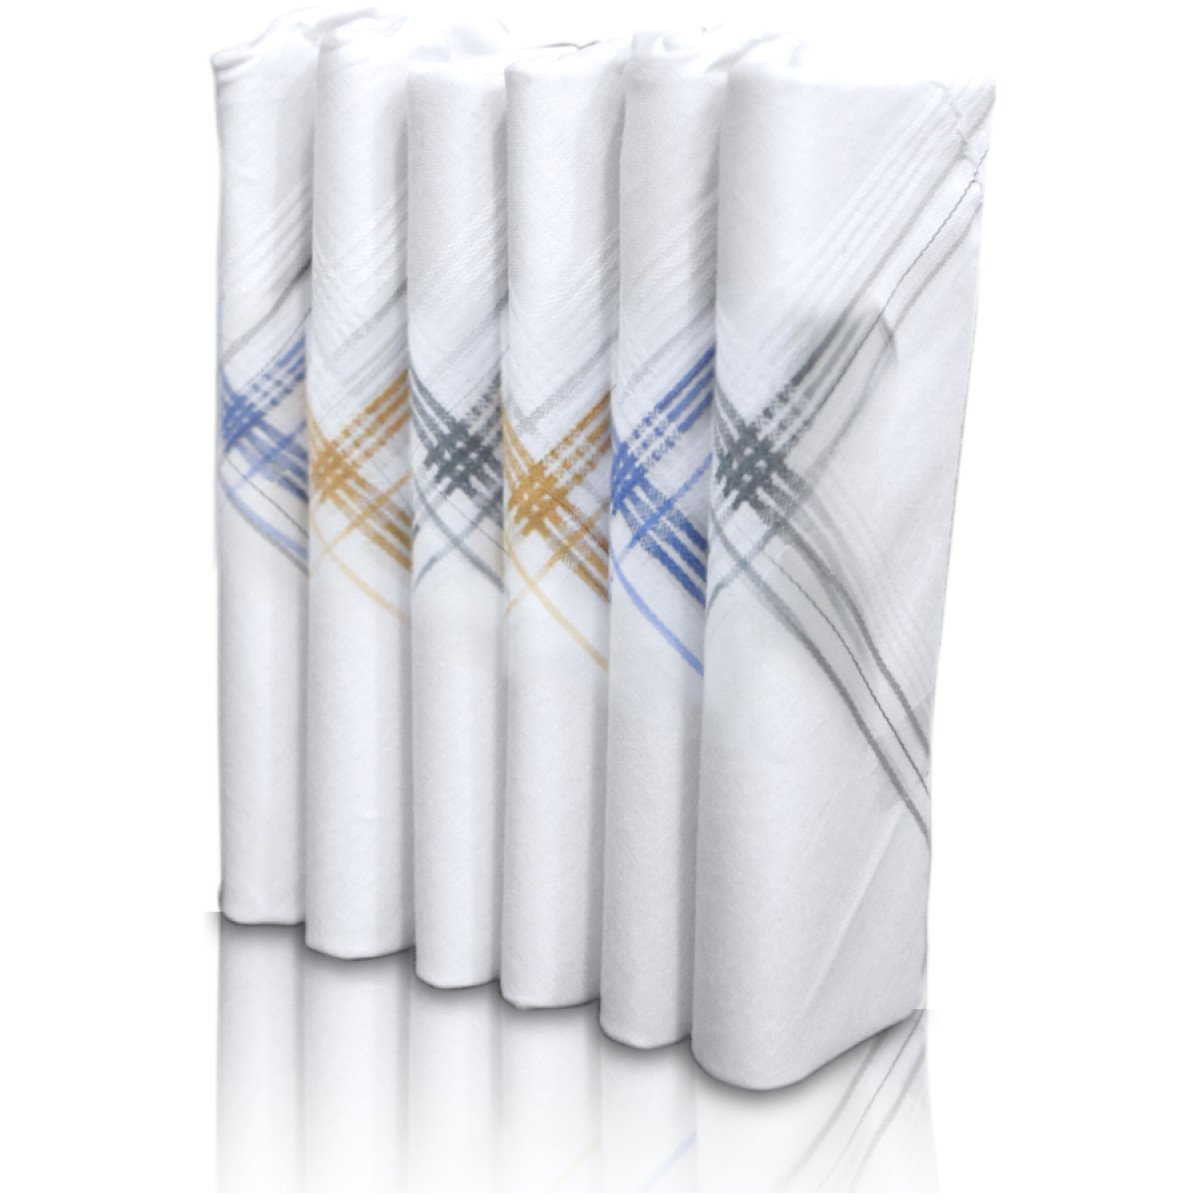 SHELTER Premium HandKerchiefs 100% | Cotton Hankies White With Color Border | Size 46 x 46 CM Pack of 6